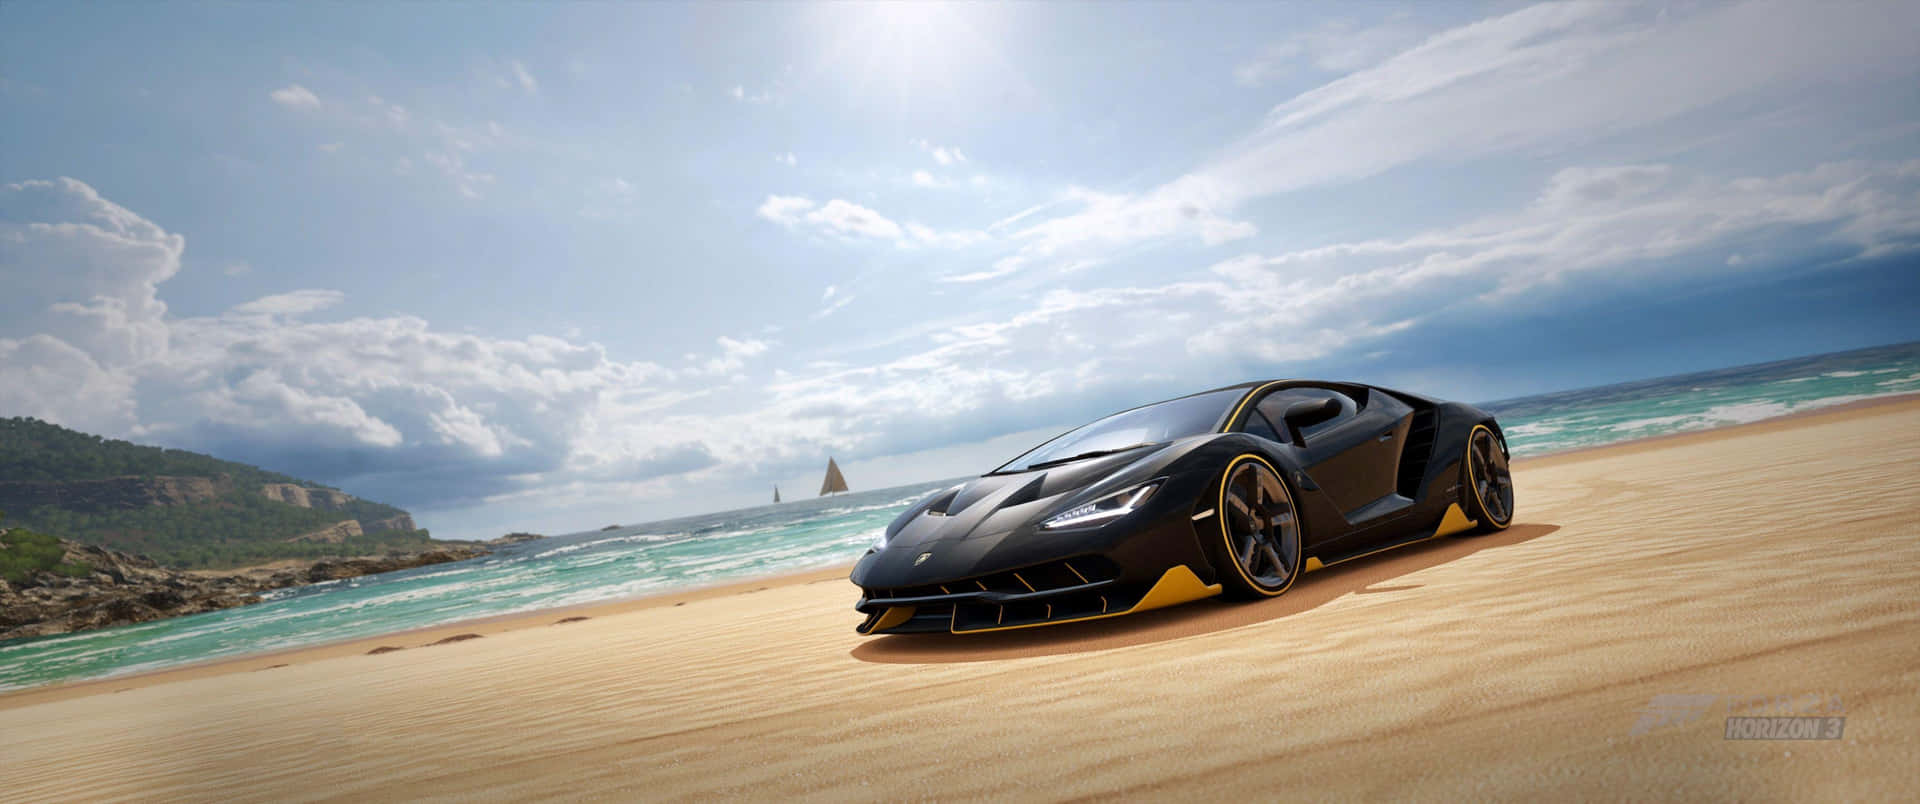 Lamborghiniam Strand Forza Horizon 4 Hd Wallpaper